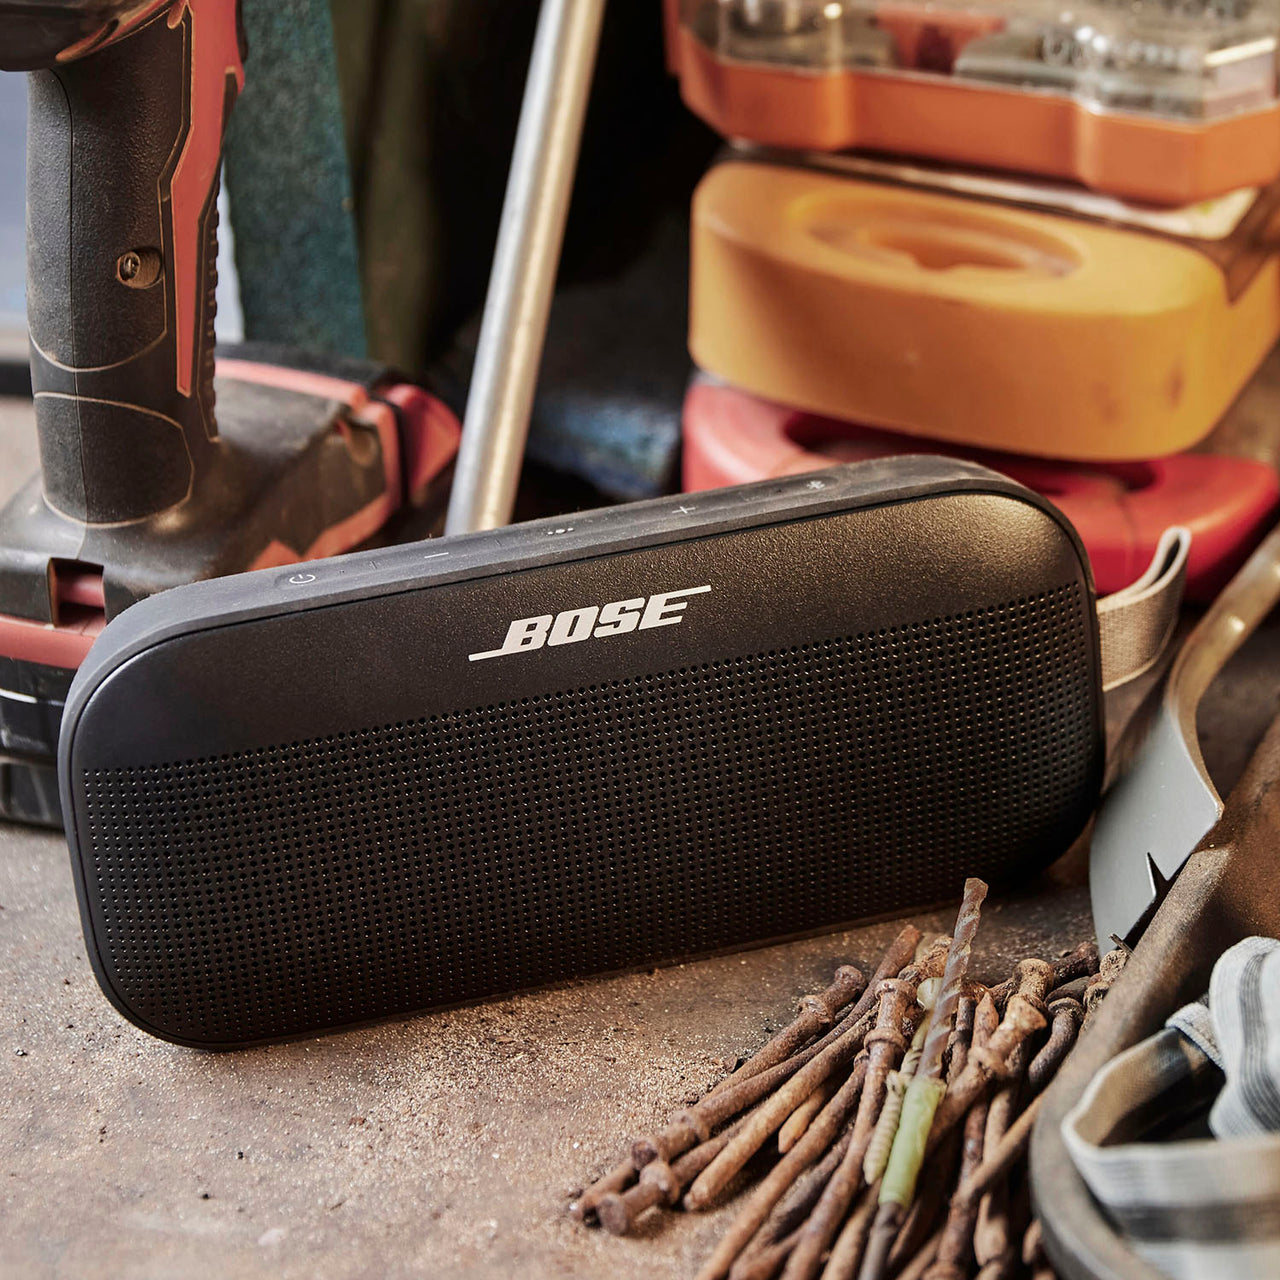 Bose - SoundLink Flex Portable Bluetooth Speaker with Waterproof/Dustproof Design - Black